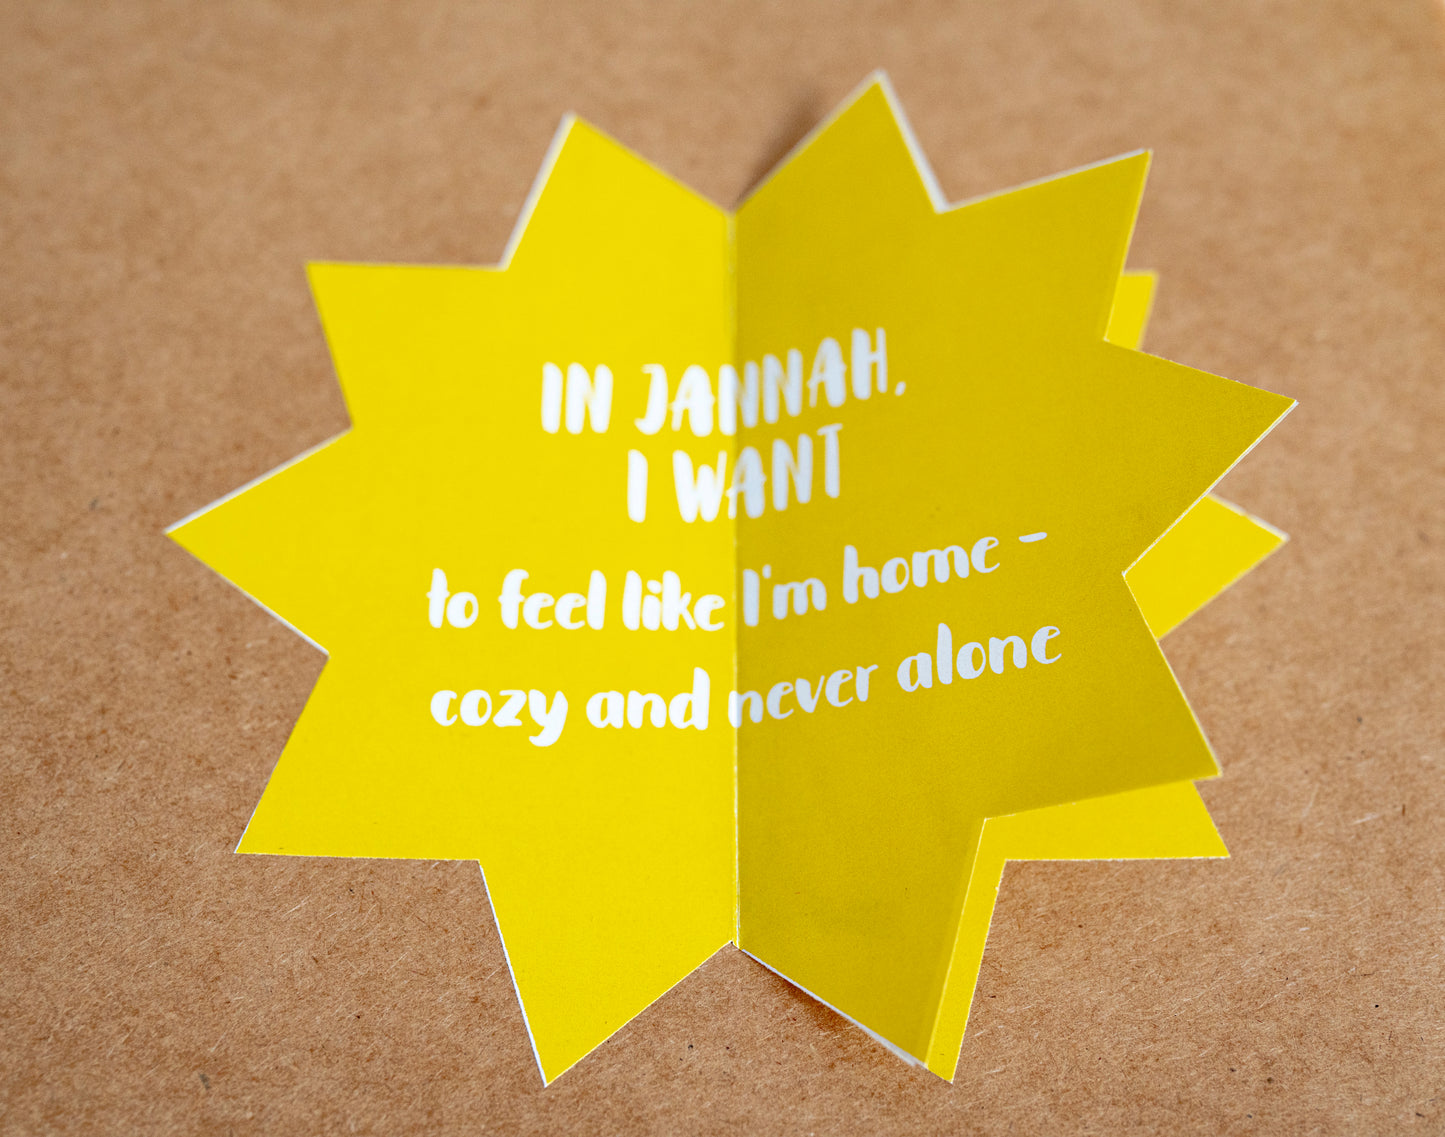 Jannah Journal - 'In Jannah I want...'